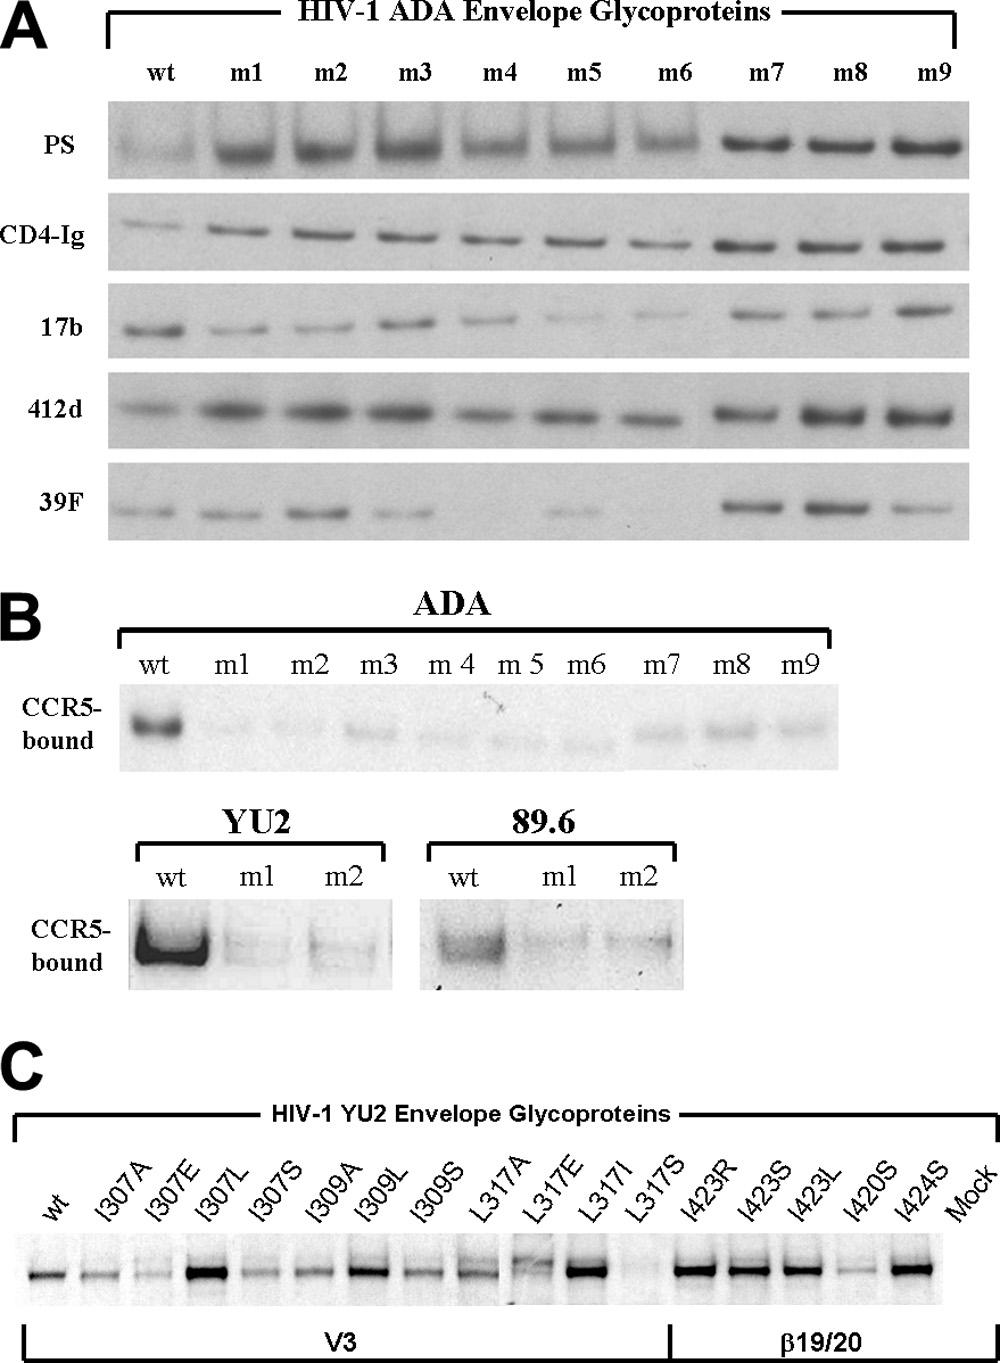 3152 XIANG ET AL. J. VIROL. FIG. 4. Binding of ligands to HIV-1 envelope glycoprotein variants.